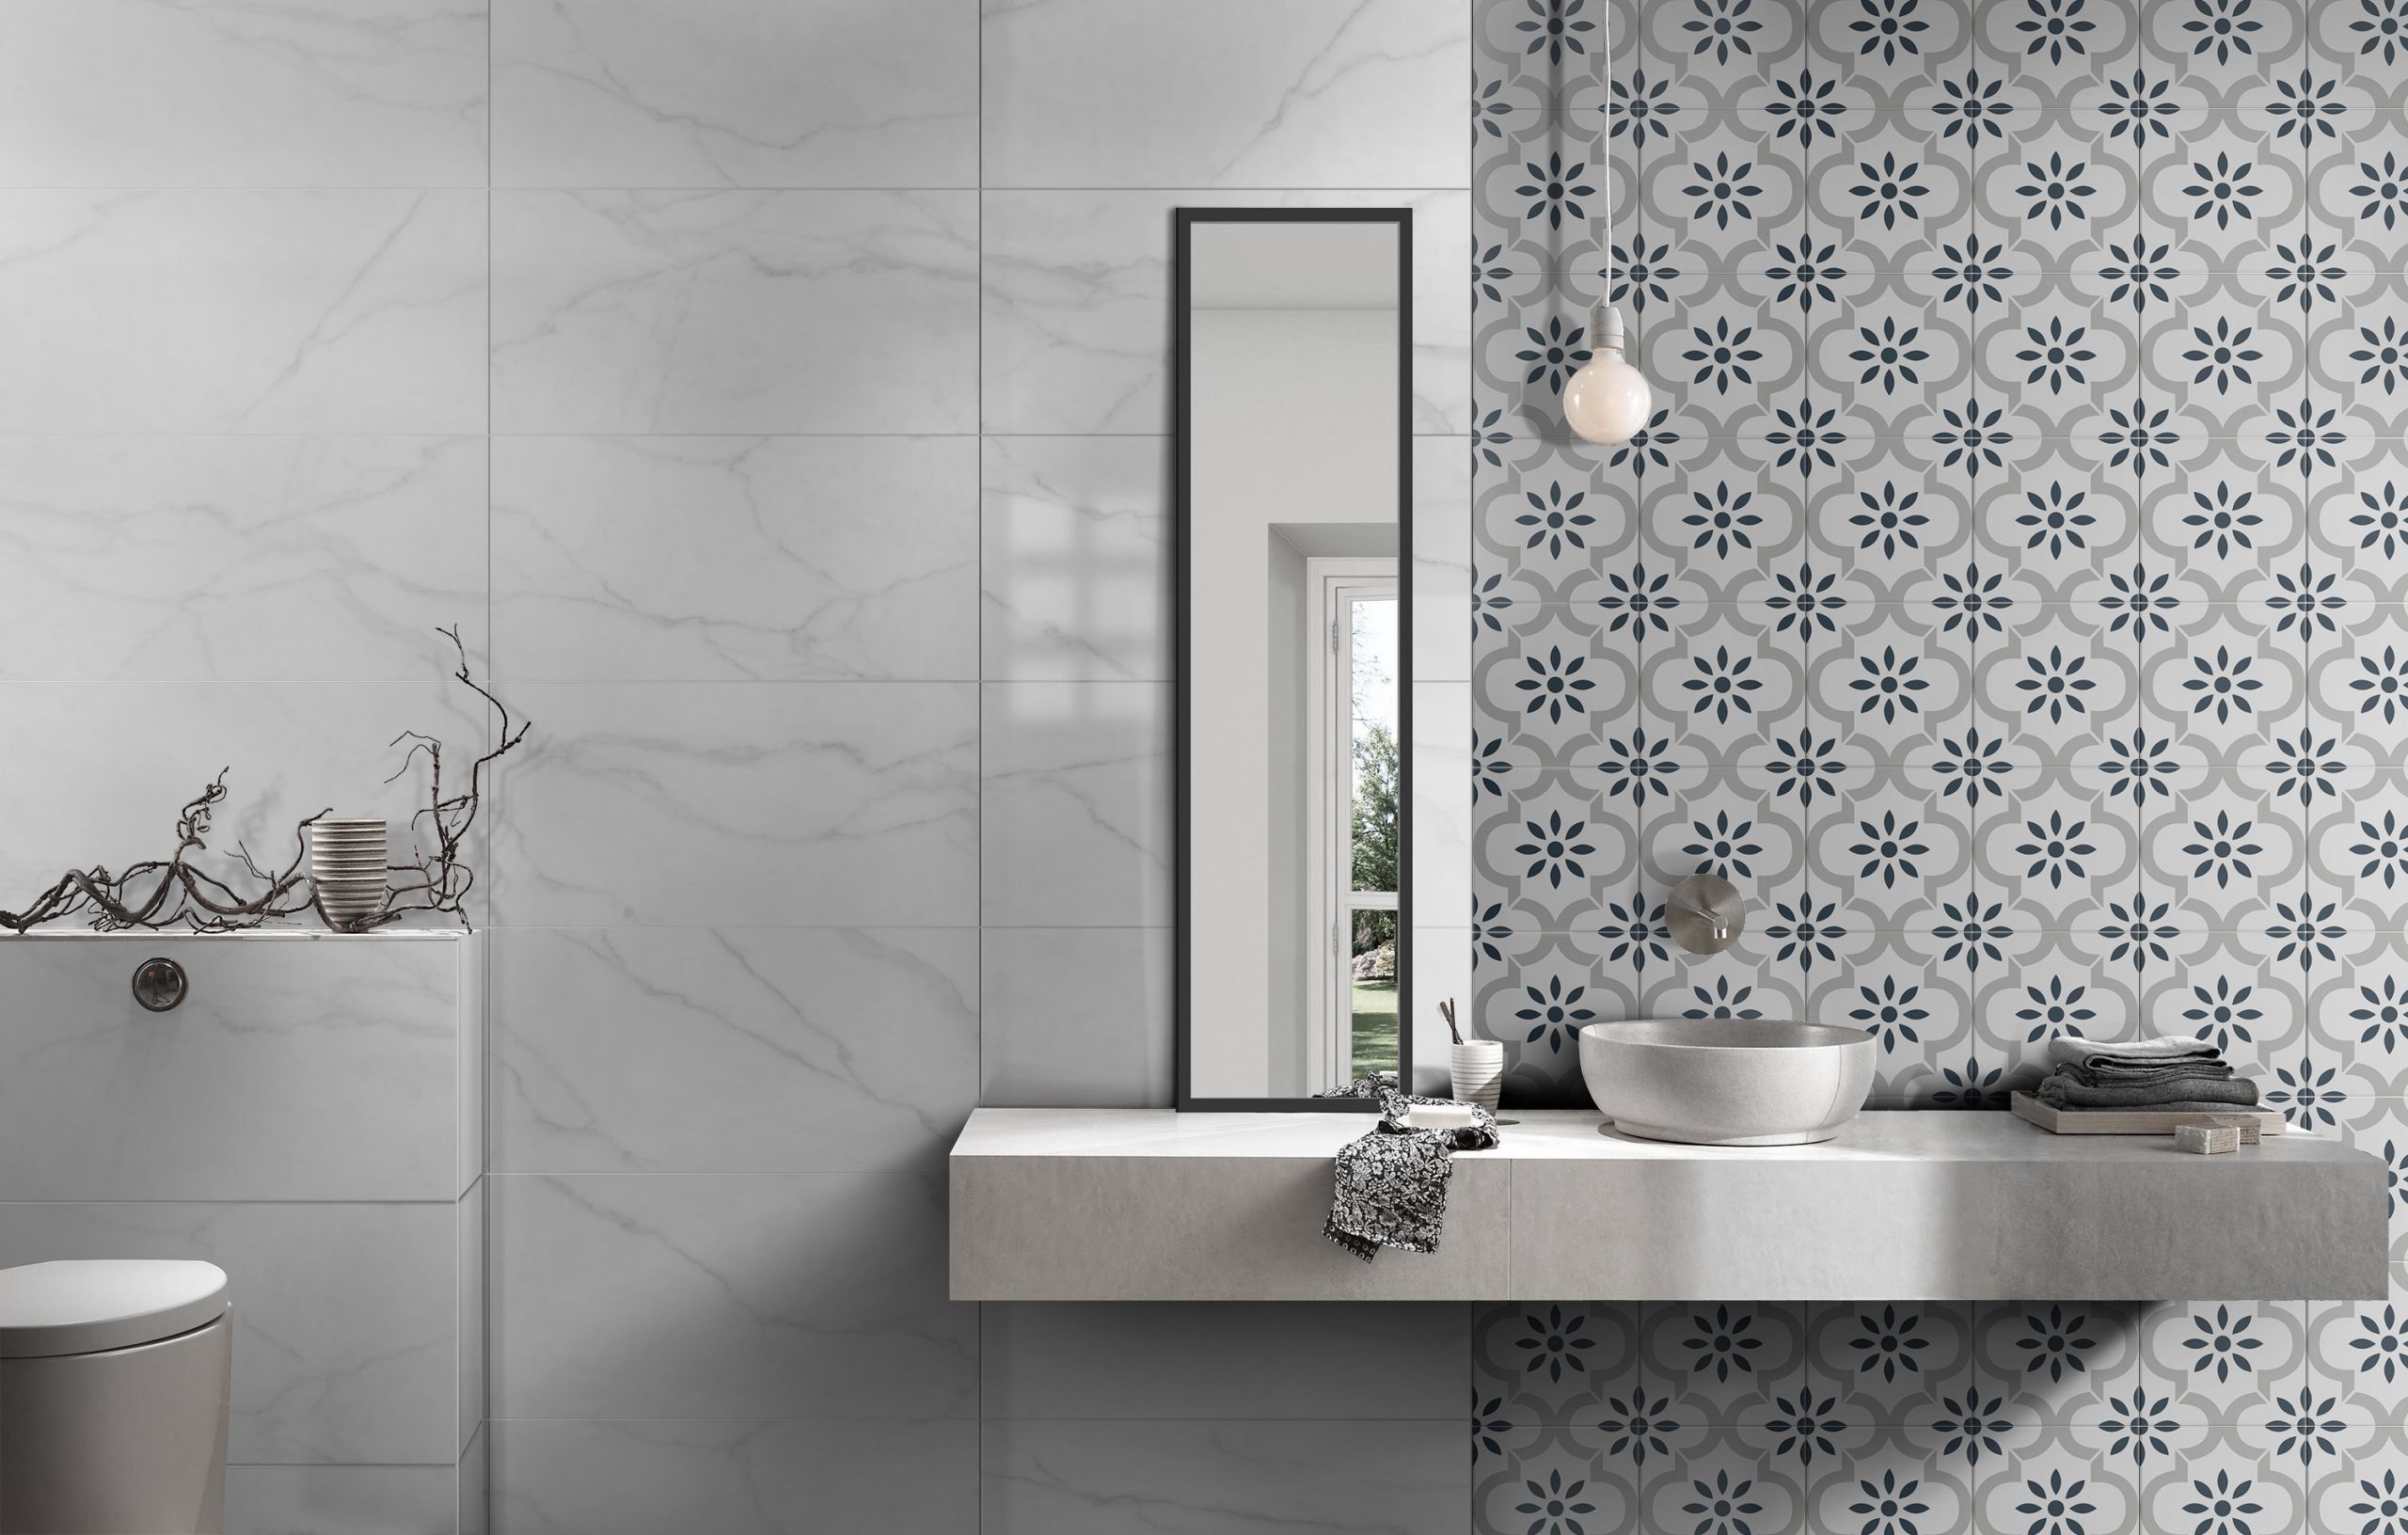 Bathroom Shower Floor Tile Ideas
 Bathroom Tile Ideas – ColorTile